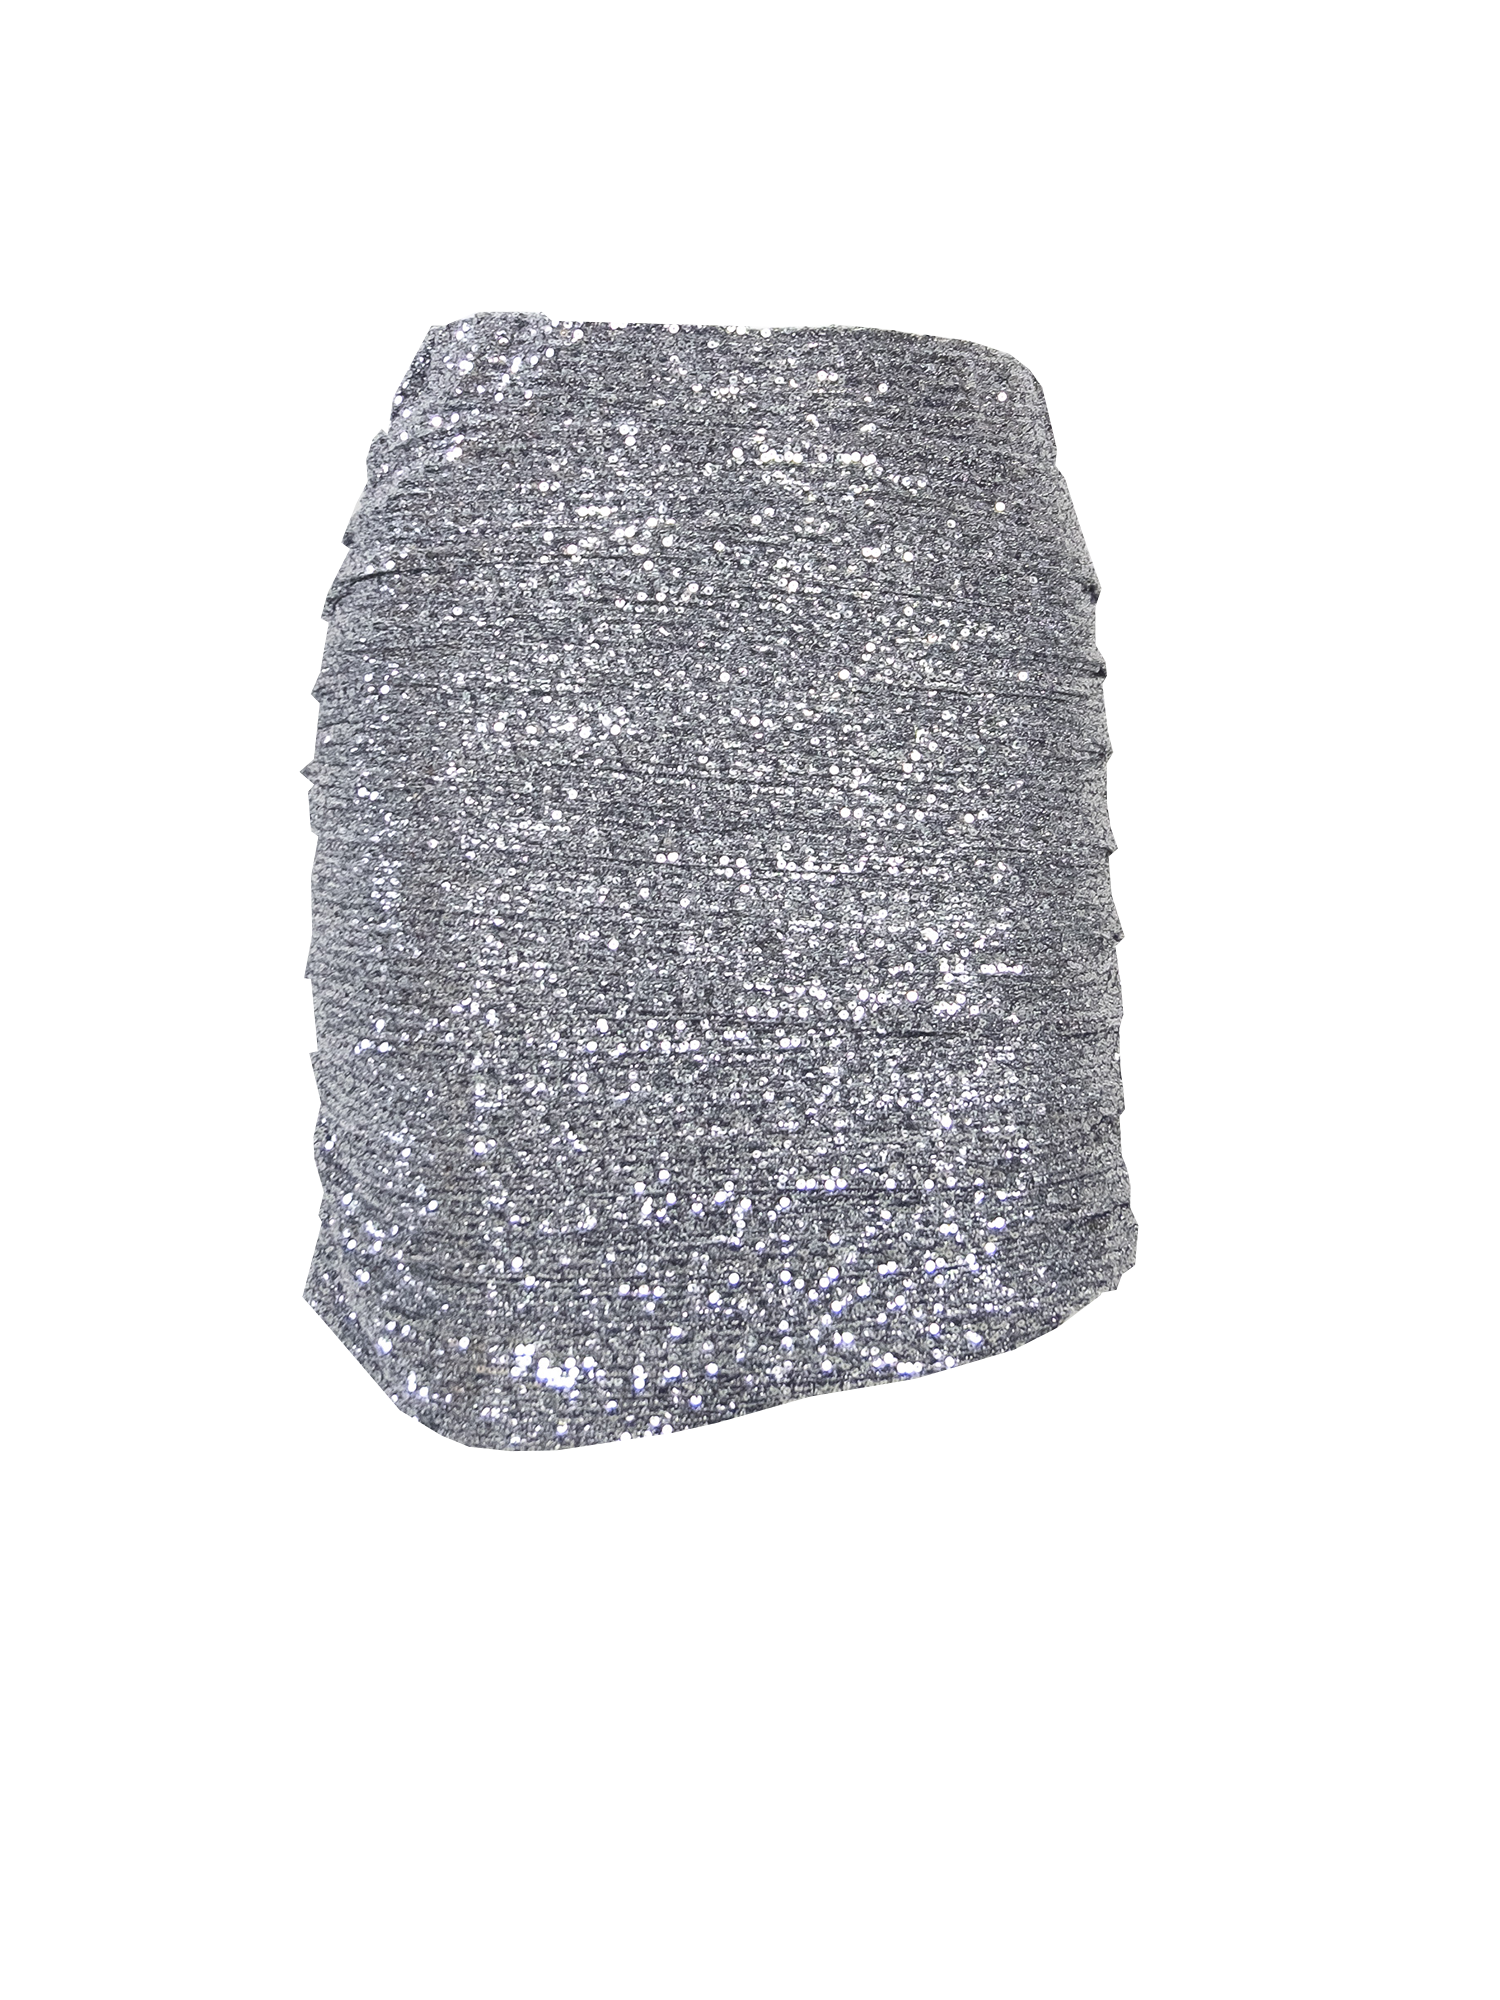 NINA - mini skirt in silver sequins